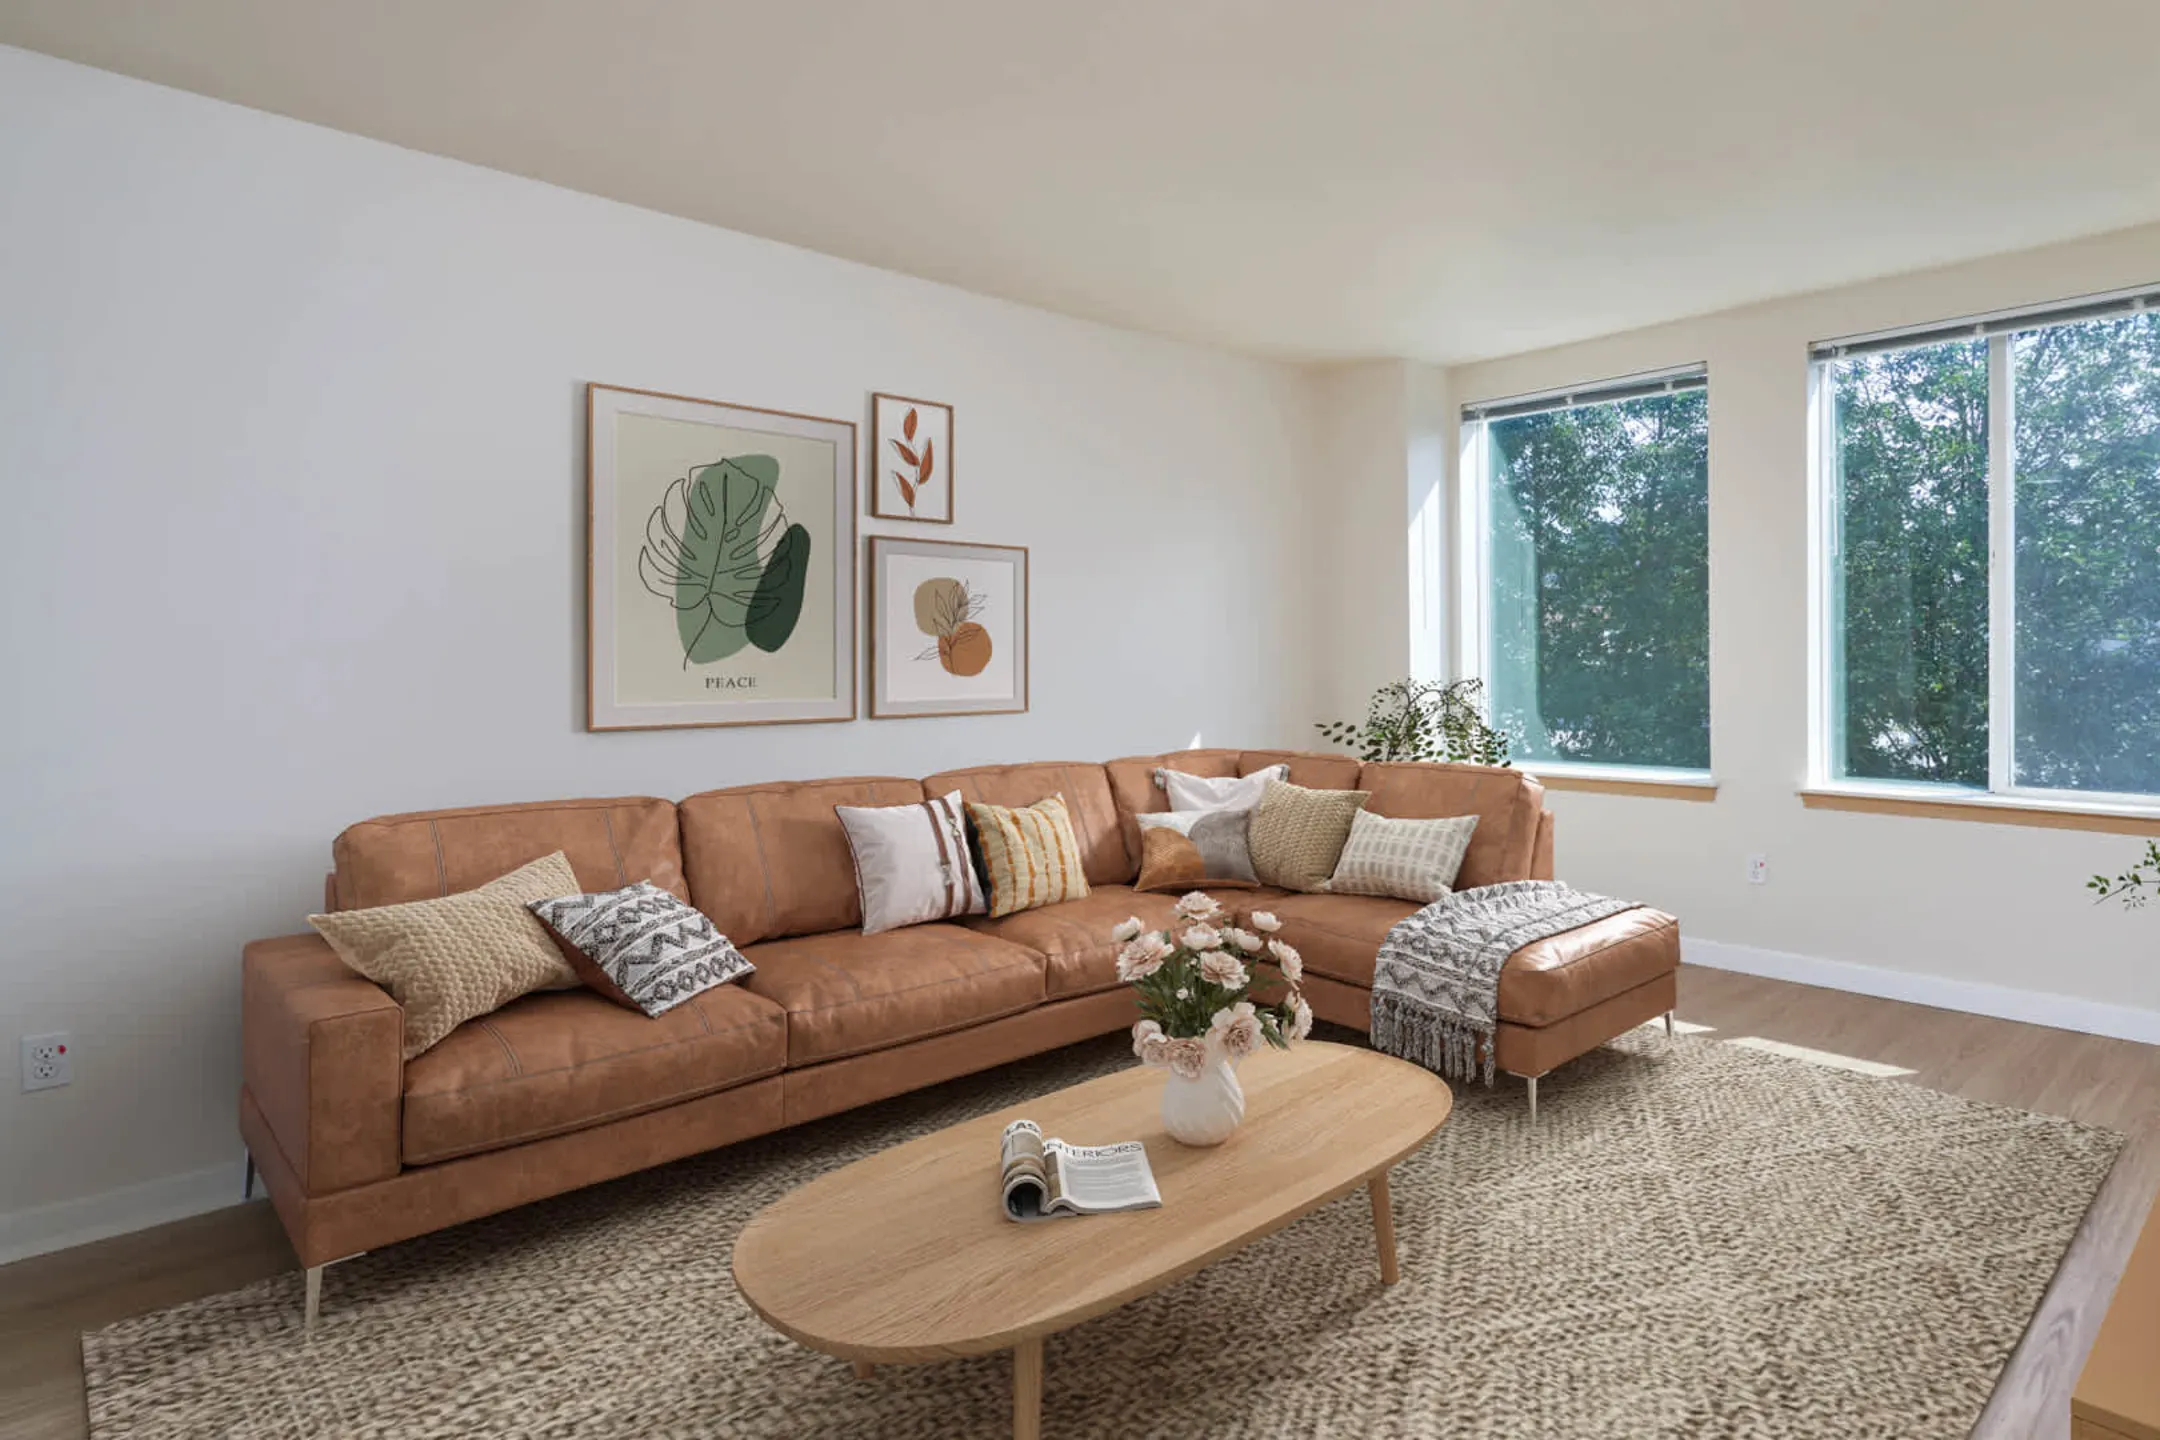 Living Room - Rianna - Seattle, WA